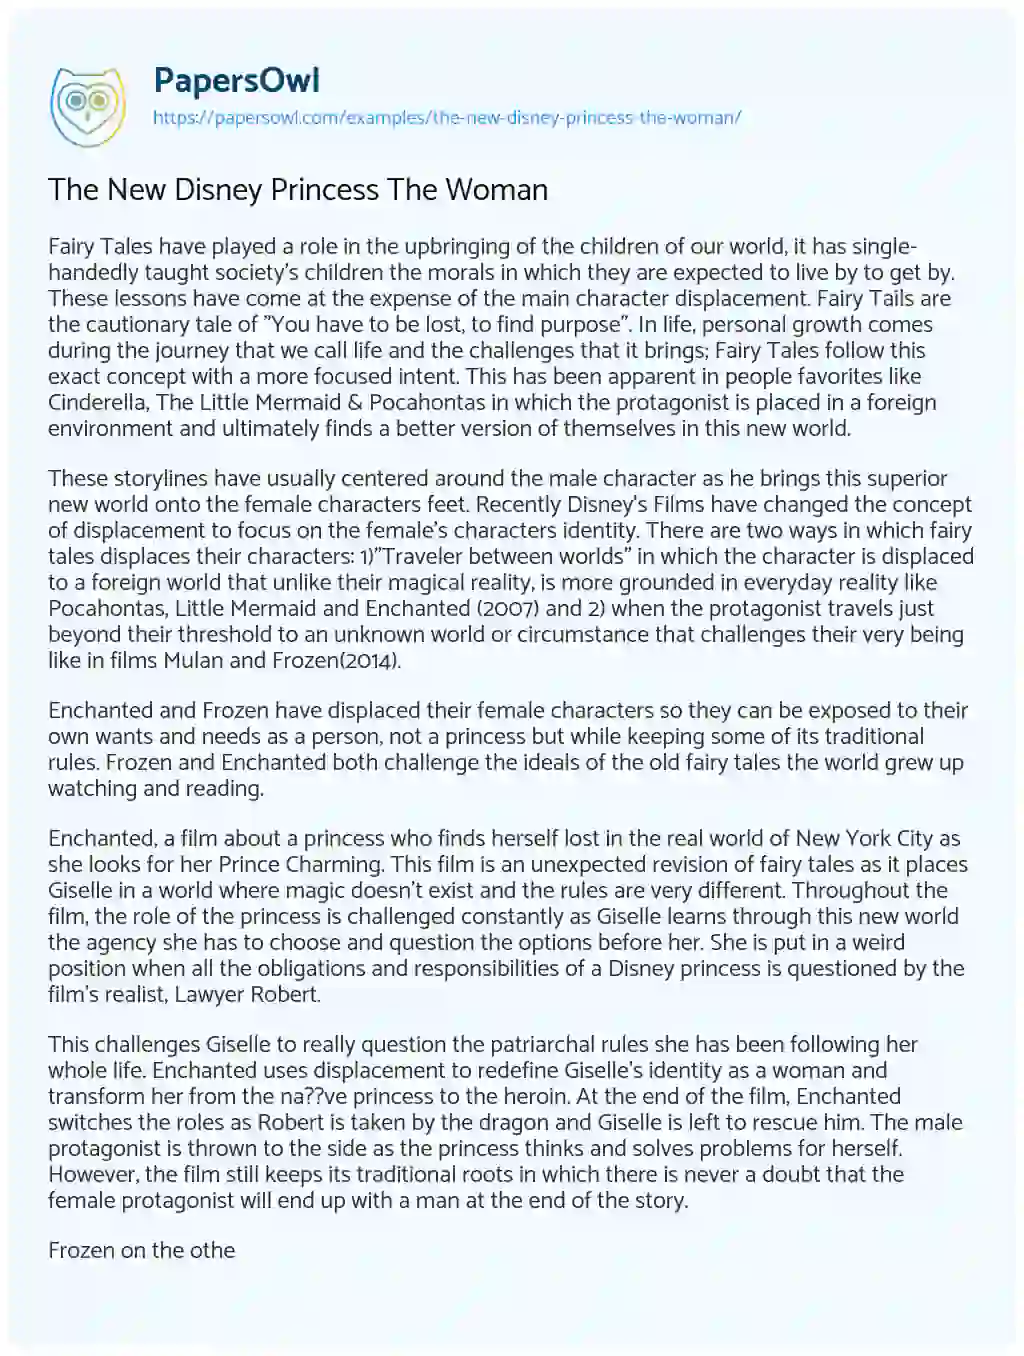 The New Disney Princess the Woman essay